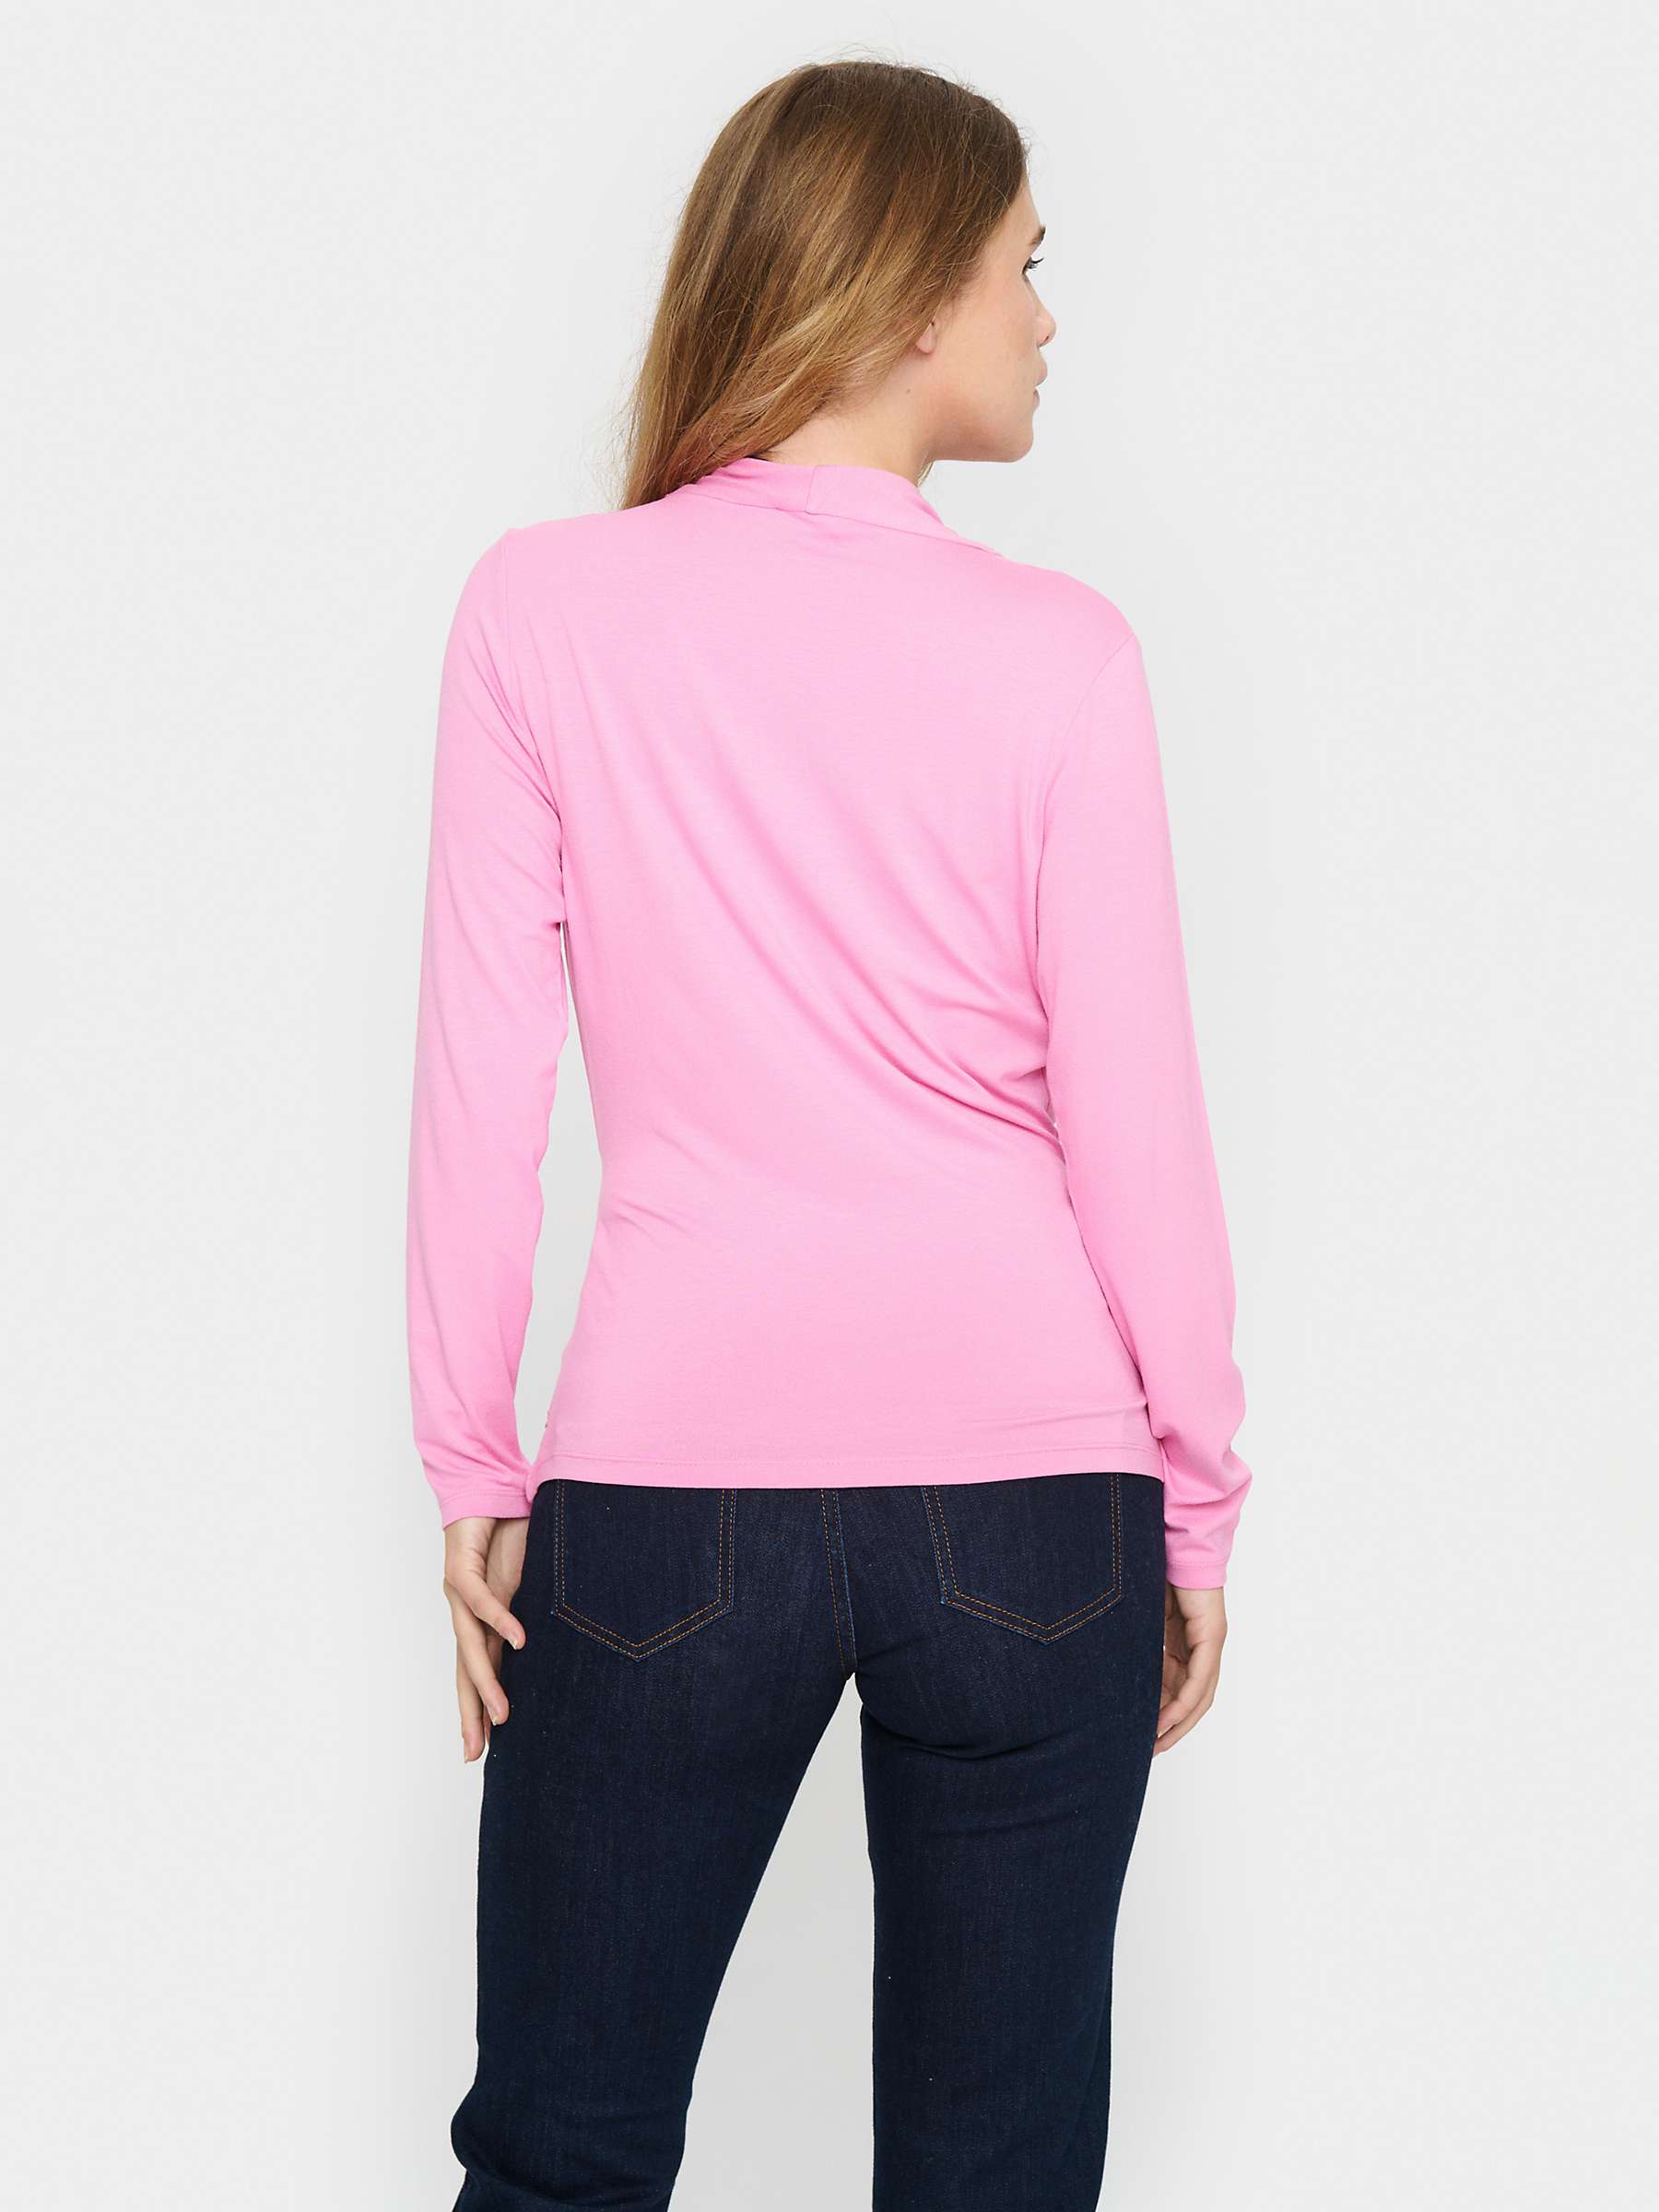 Buy Saint Tropez Vigga Wrap Long Sleeve V-neck Blouse, Fuchsia Pink Online at johnlewis.com